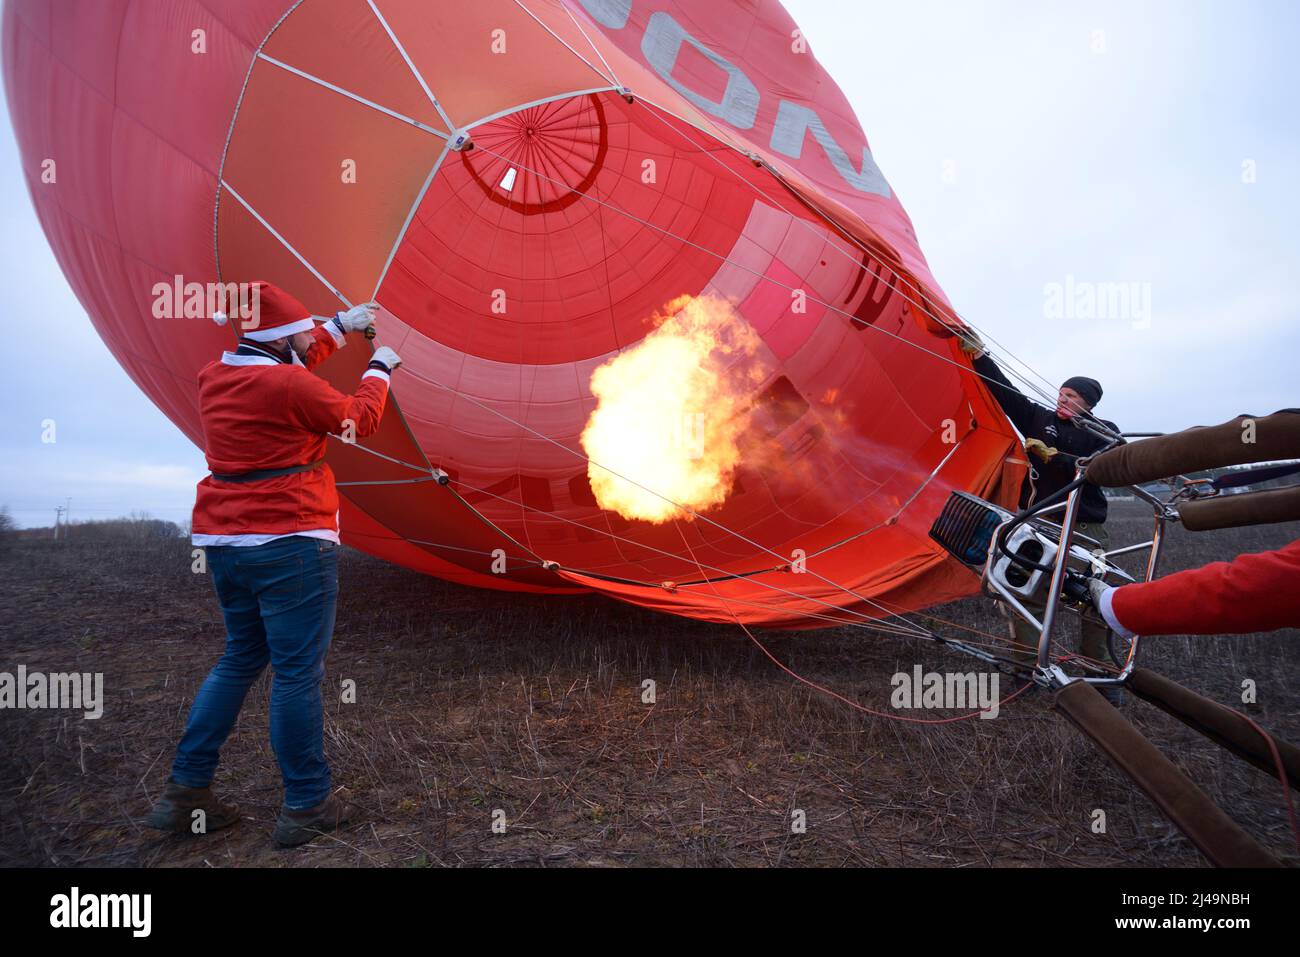 Men dressed as Santa Claus preparing hot-air balloon for launching, gas burner flaming. January 12, 2020. Kiev, Ukraine Stock Photo